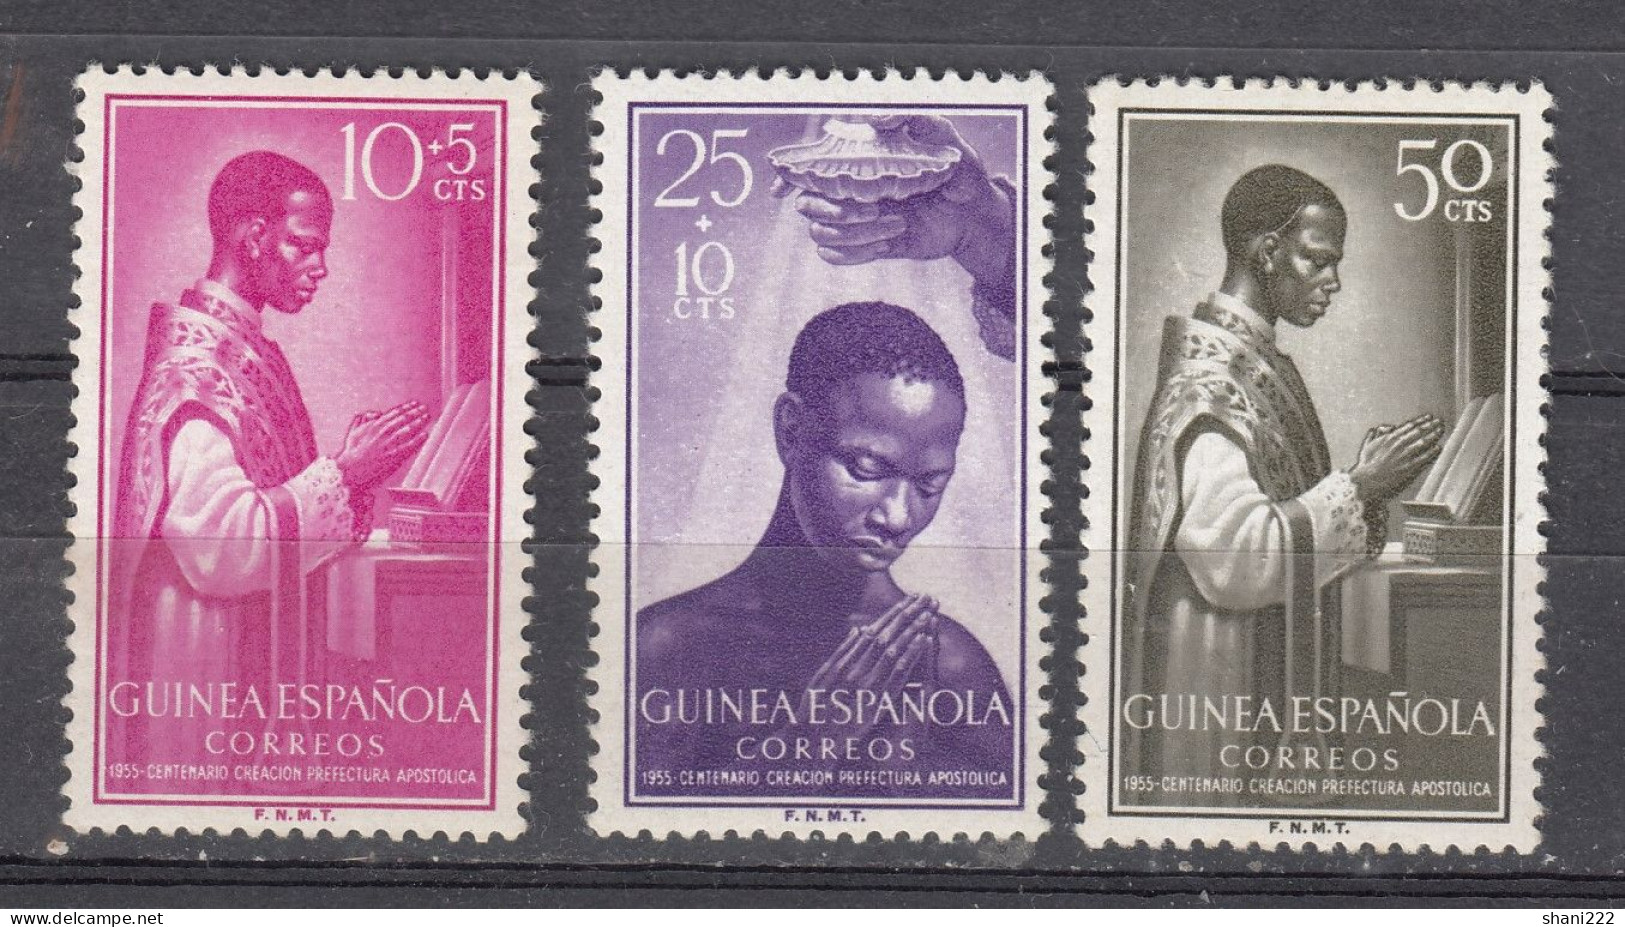 Spanish Guinea - 1955 Prefectura Apostolica - MNH (e-812) - Spanish Guinea